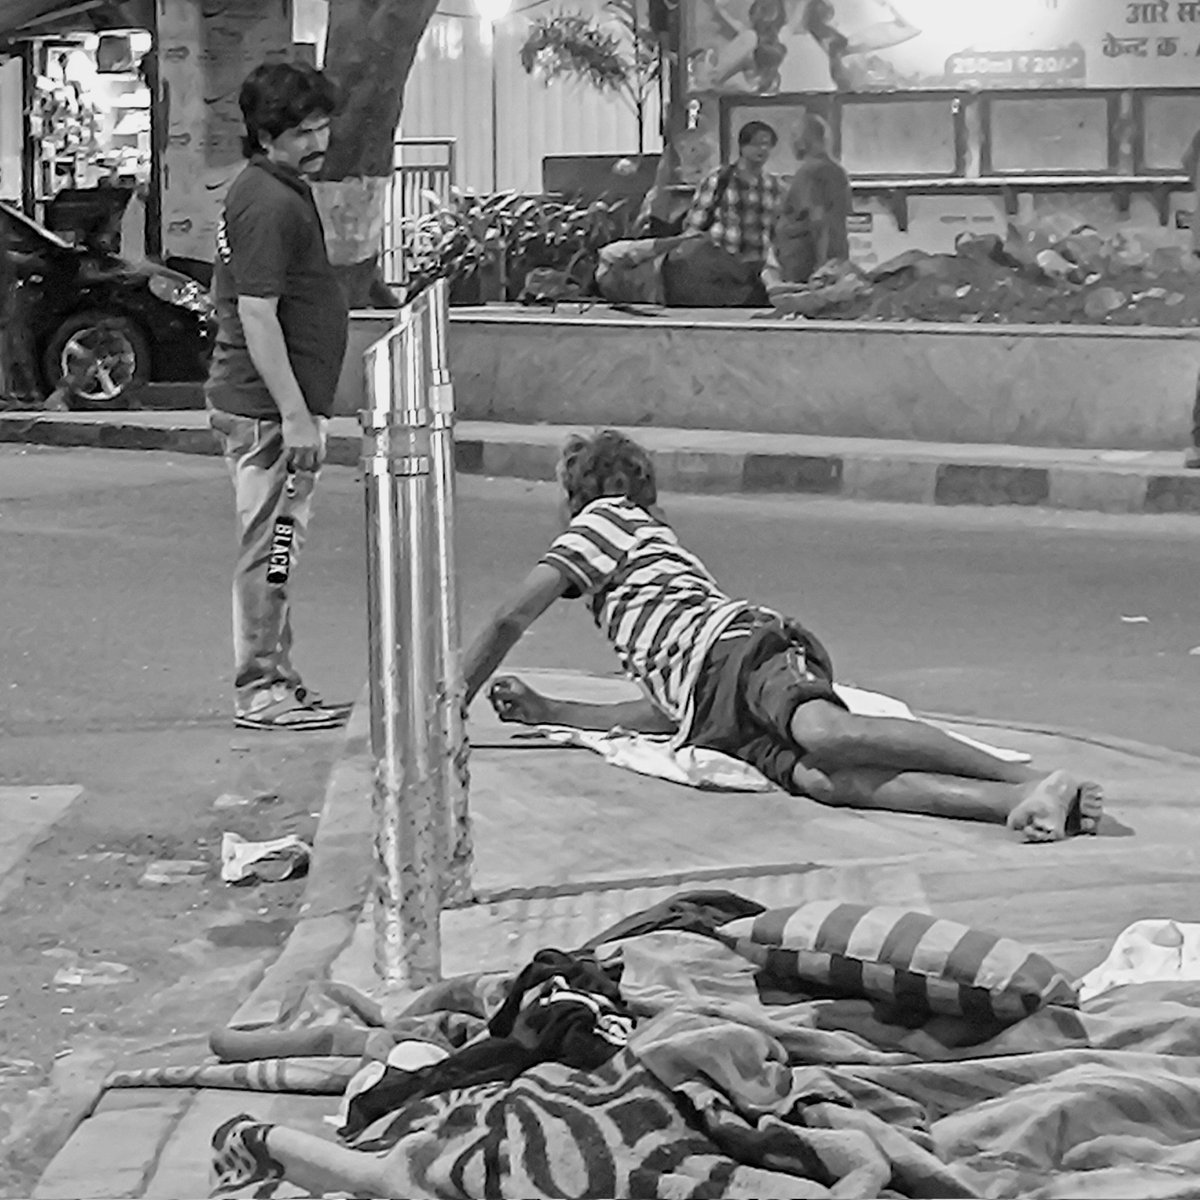 गुफ़्तगू ~ The Conversation.. 📸 📸 📸
#Photo #photography #photos  #photographylife #photographylovers #shotinindia #perspective #Street #streetlife #streetstyle #streetphotography #Photography #Mumbai #AamchiMumbai #India #IncredibleIndia #EchoesOfIndia #peopleofindia